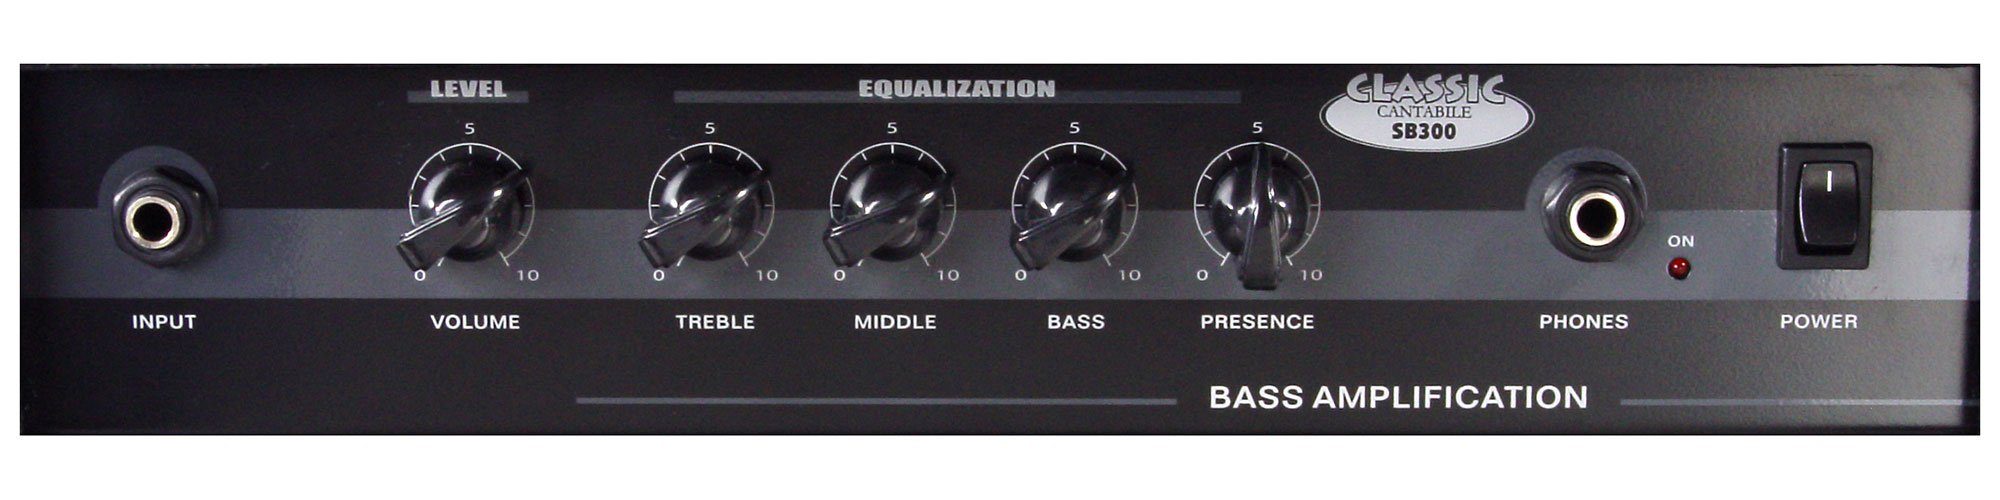 Basscombo - W, - Equalizer (60 Verstärker Bassreflex-Gehäuse) Cantabile Bassverstärker 4-Band Speaker Classic - 10" SB-300